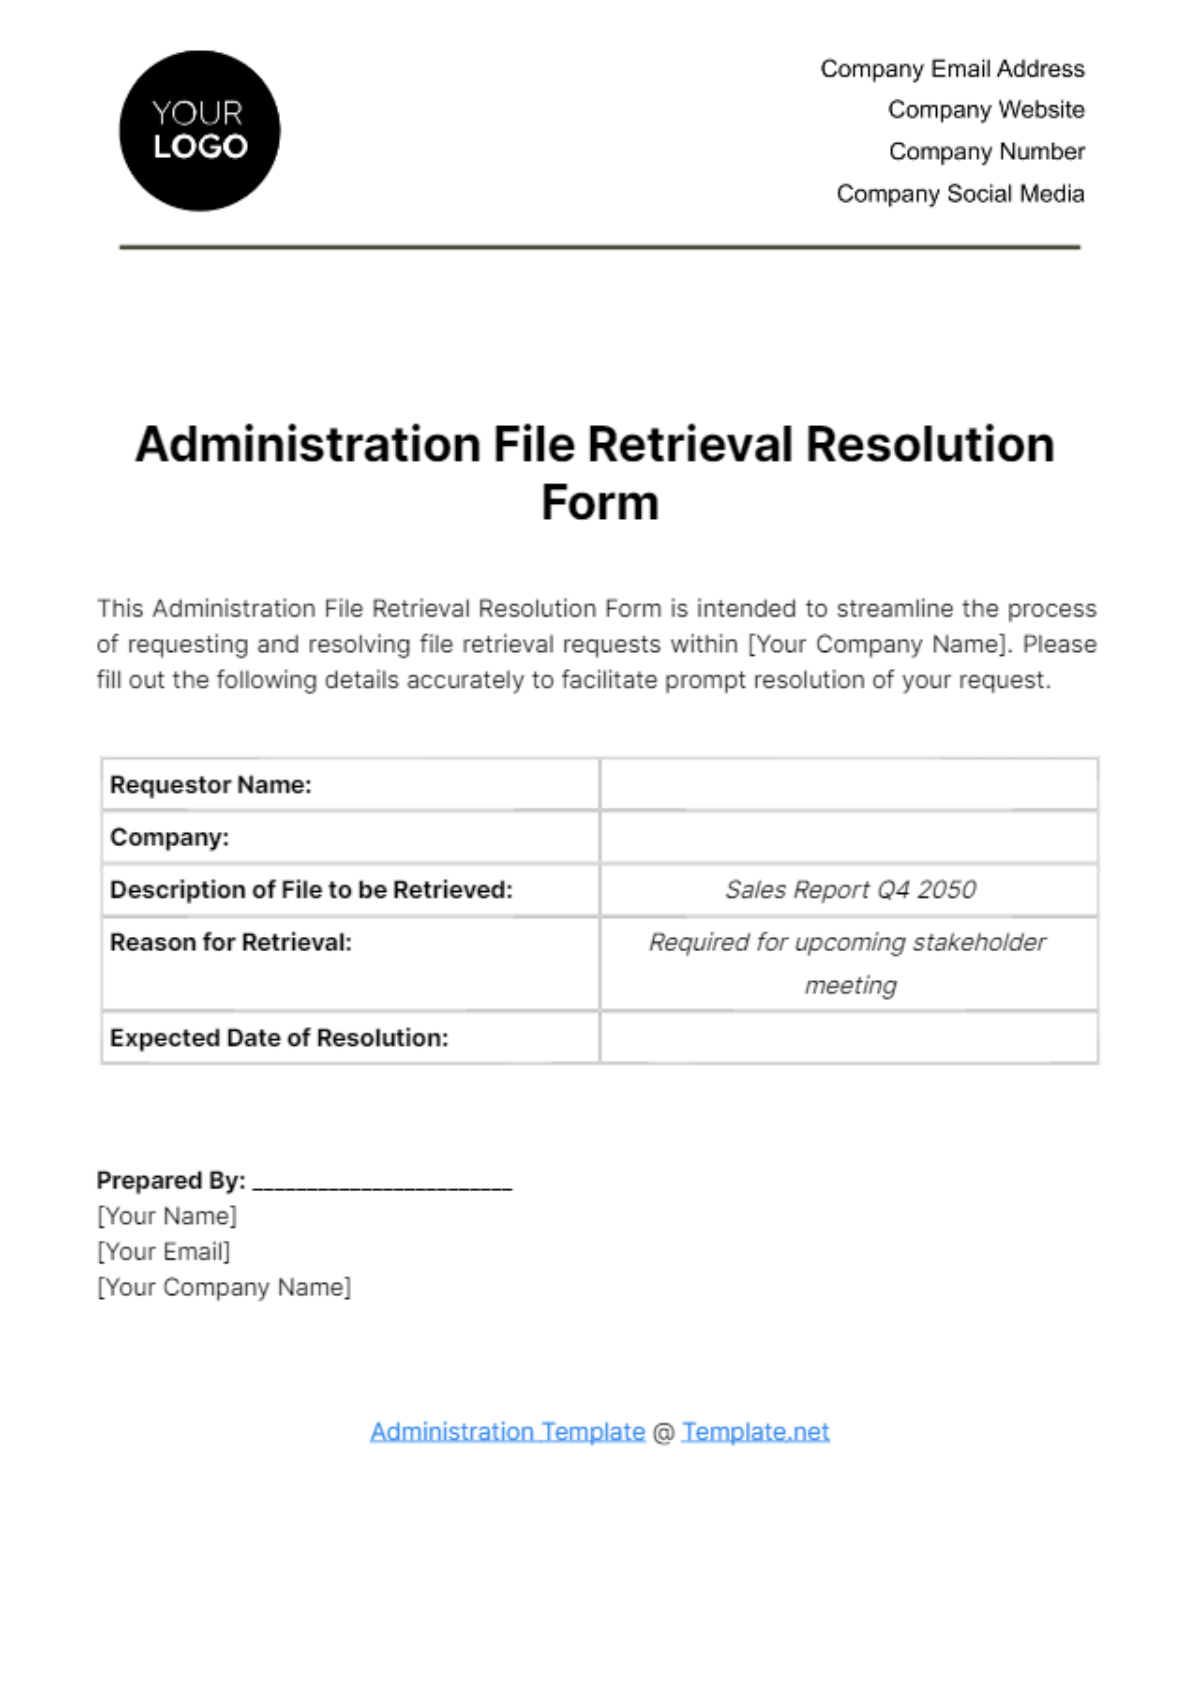 Administration File Retrieval Resolution Form Template